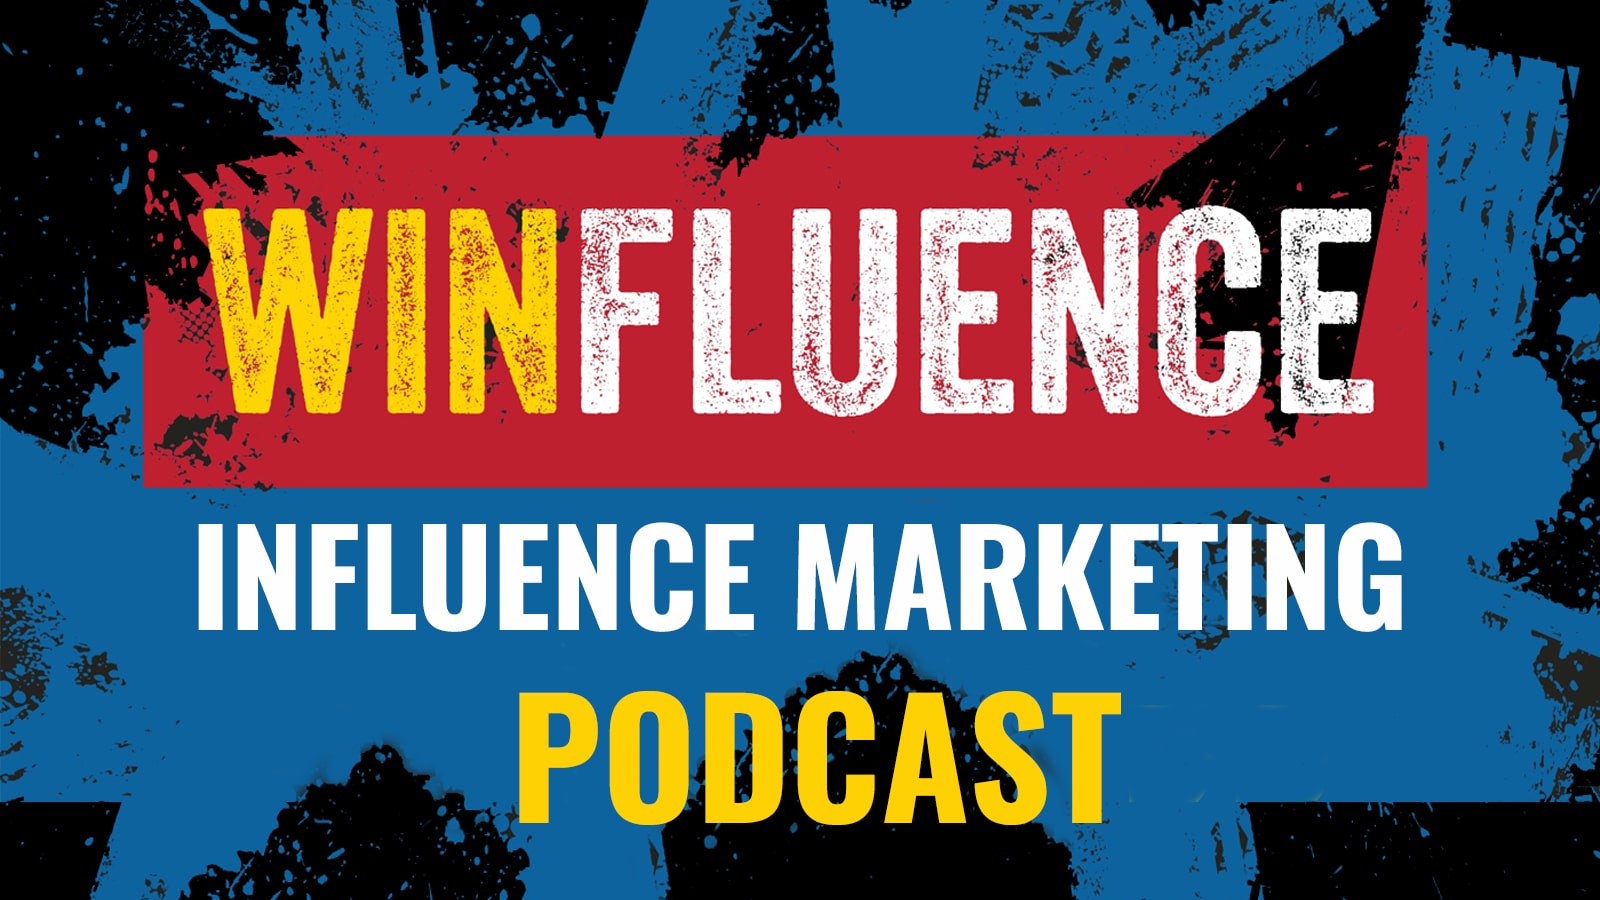 Winfluence - The Influence Marketing Podcast Header